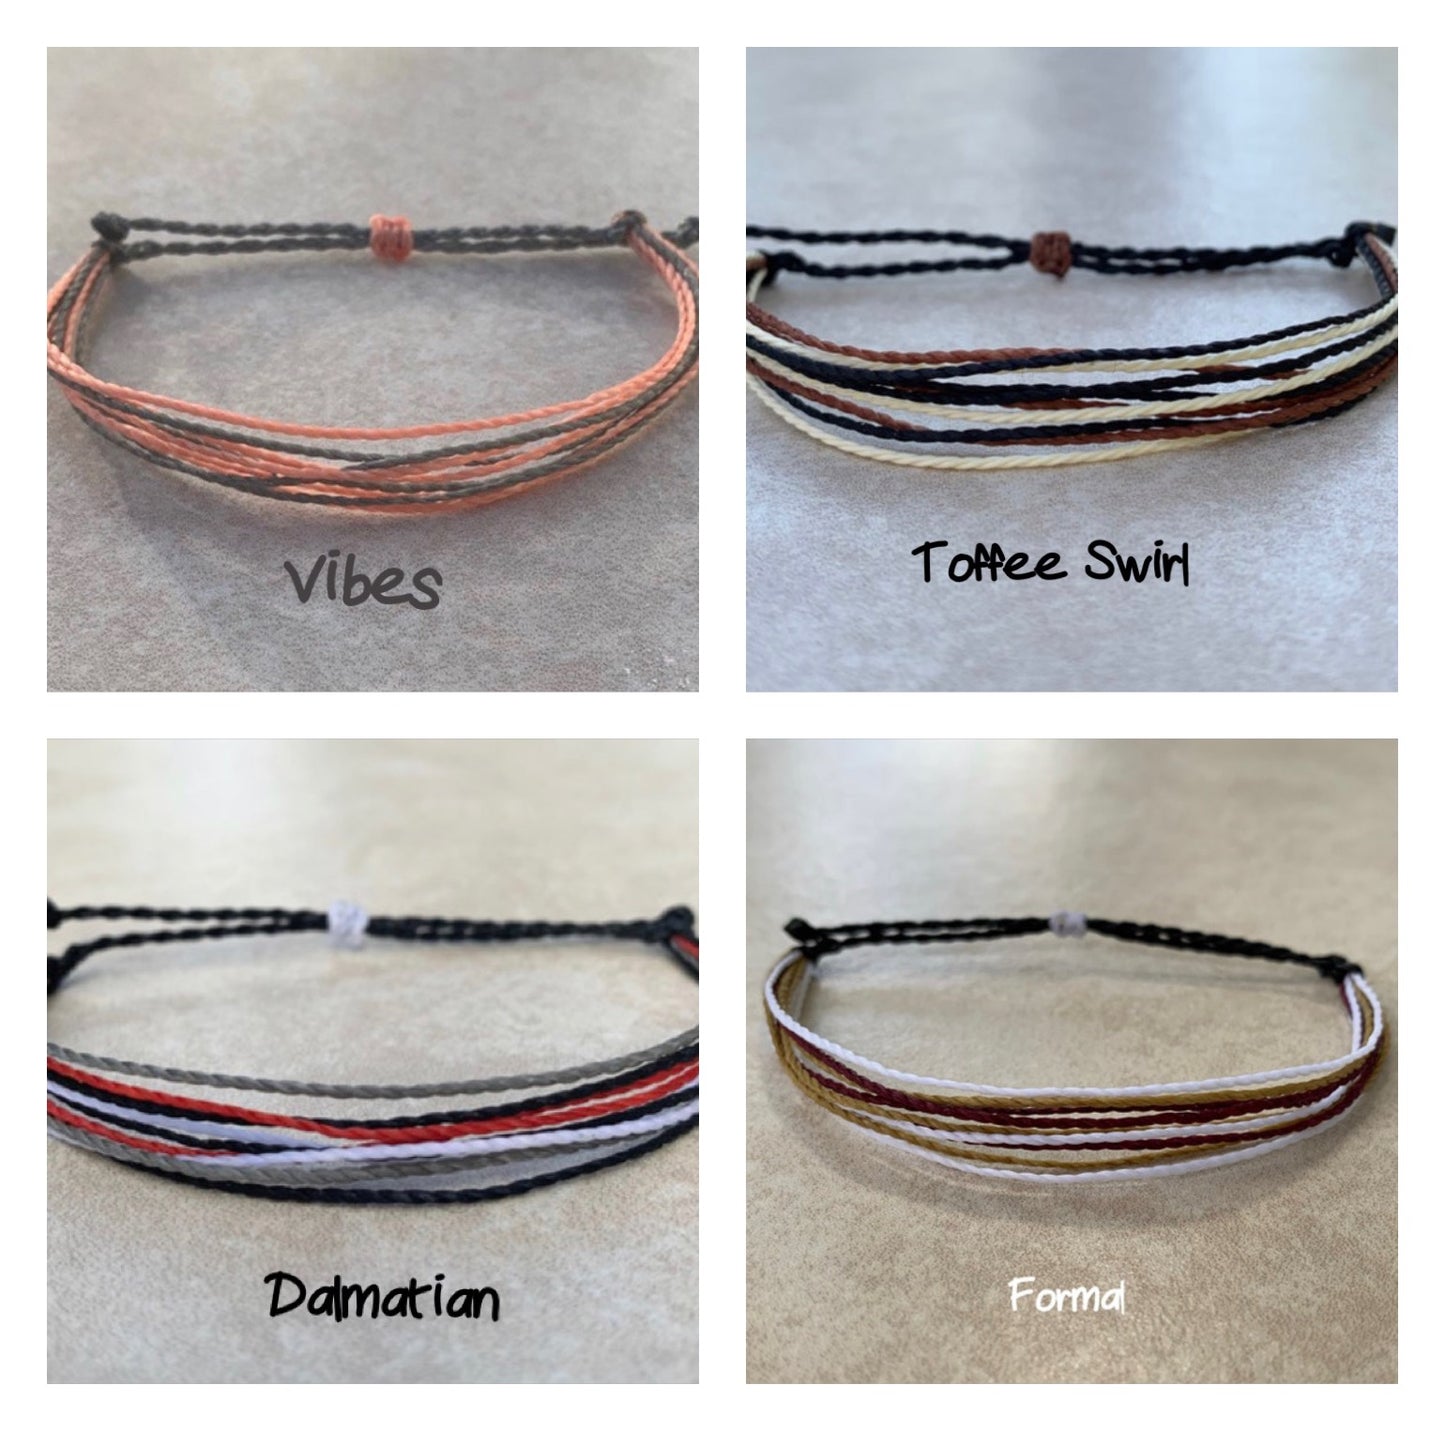 how to make a braided wax string bracelet｜TikTok Search